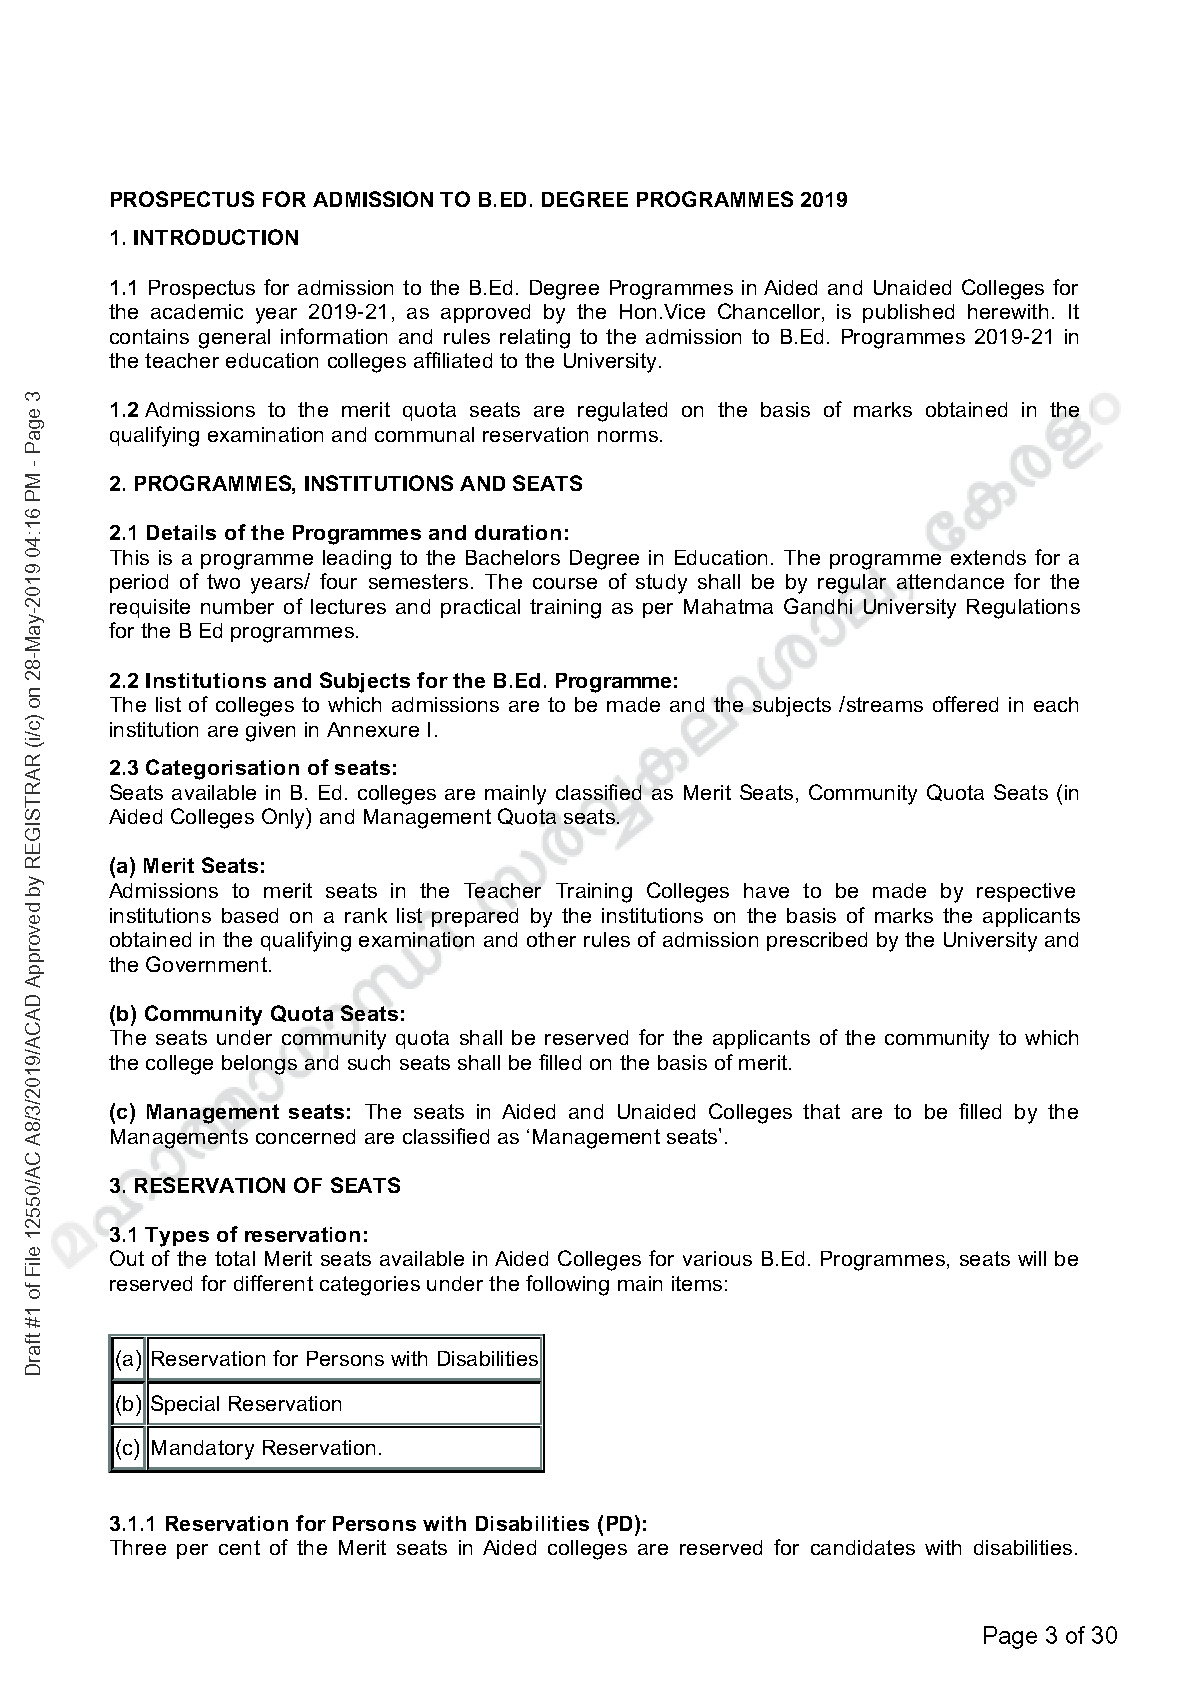 MG University B Ed Prospectus and Application form 2019 2020 - Notification Image 3